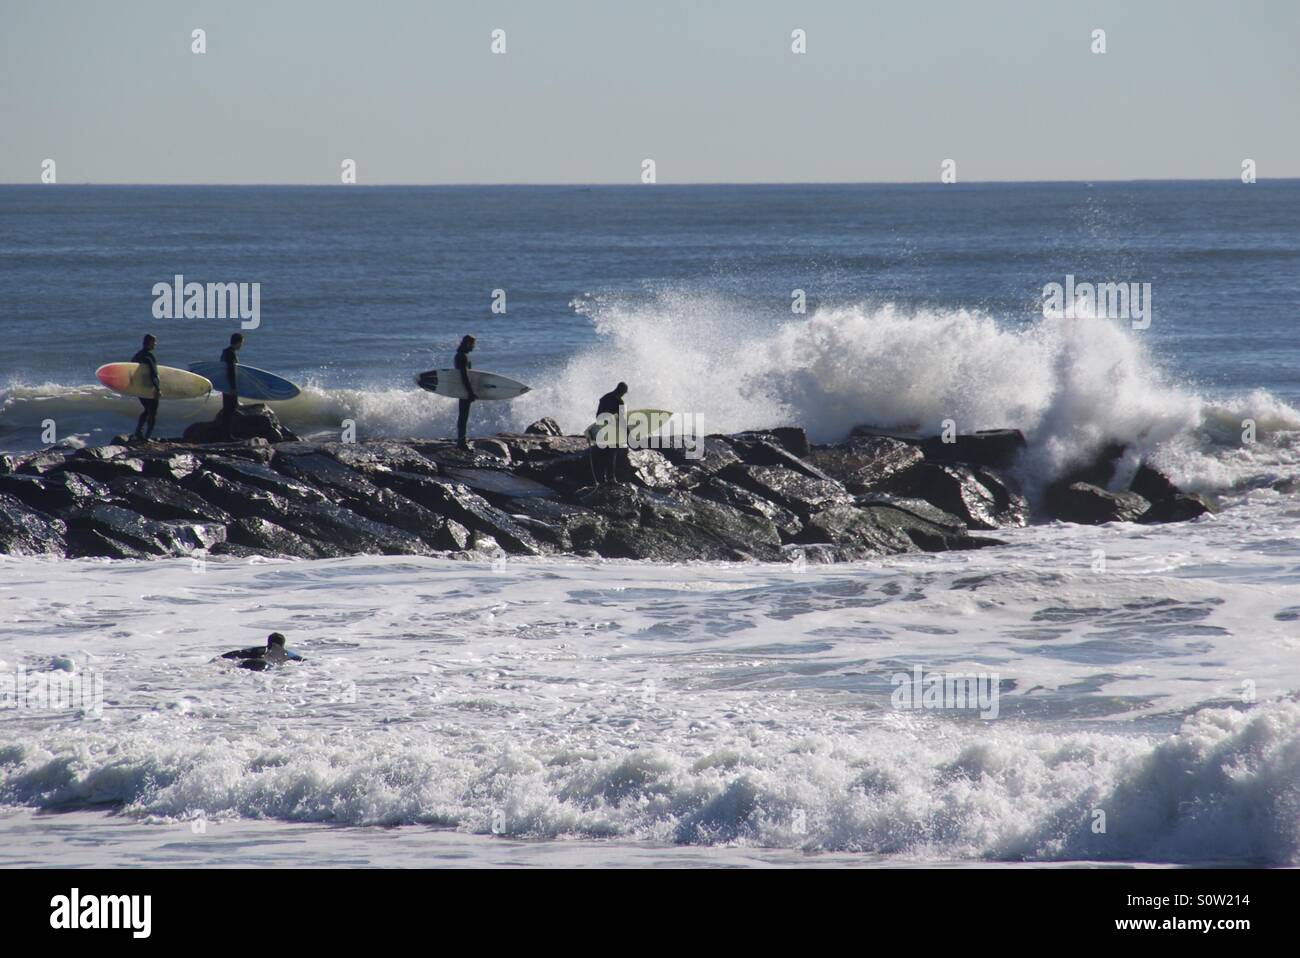 Surfers on a jetty with big waves, Rockaway beach, NYC Stock Photo